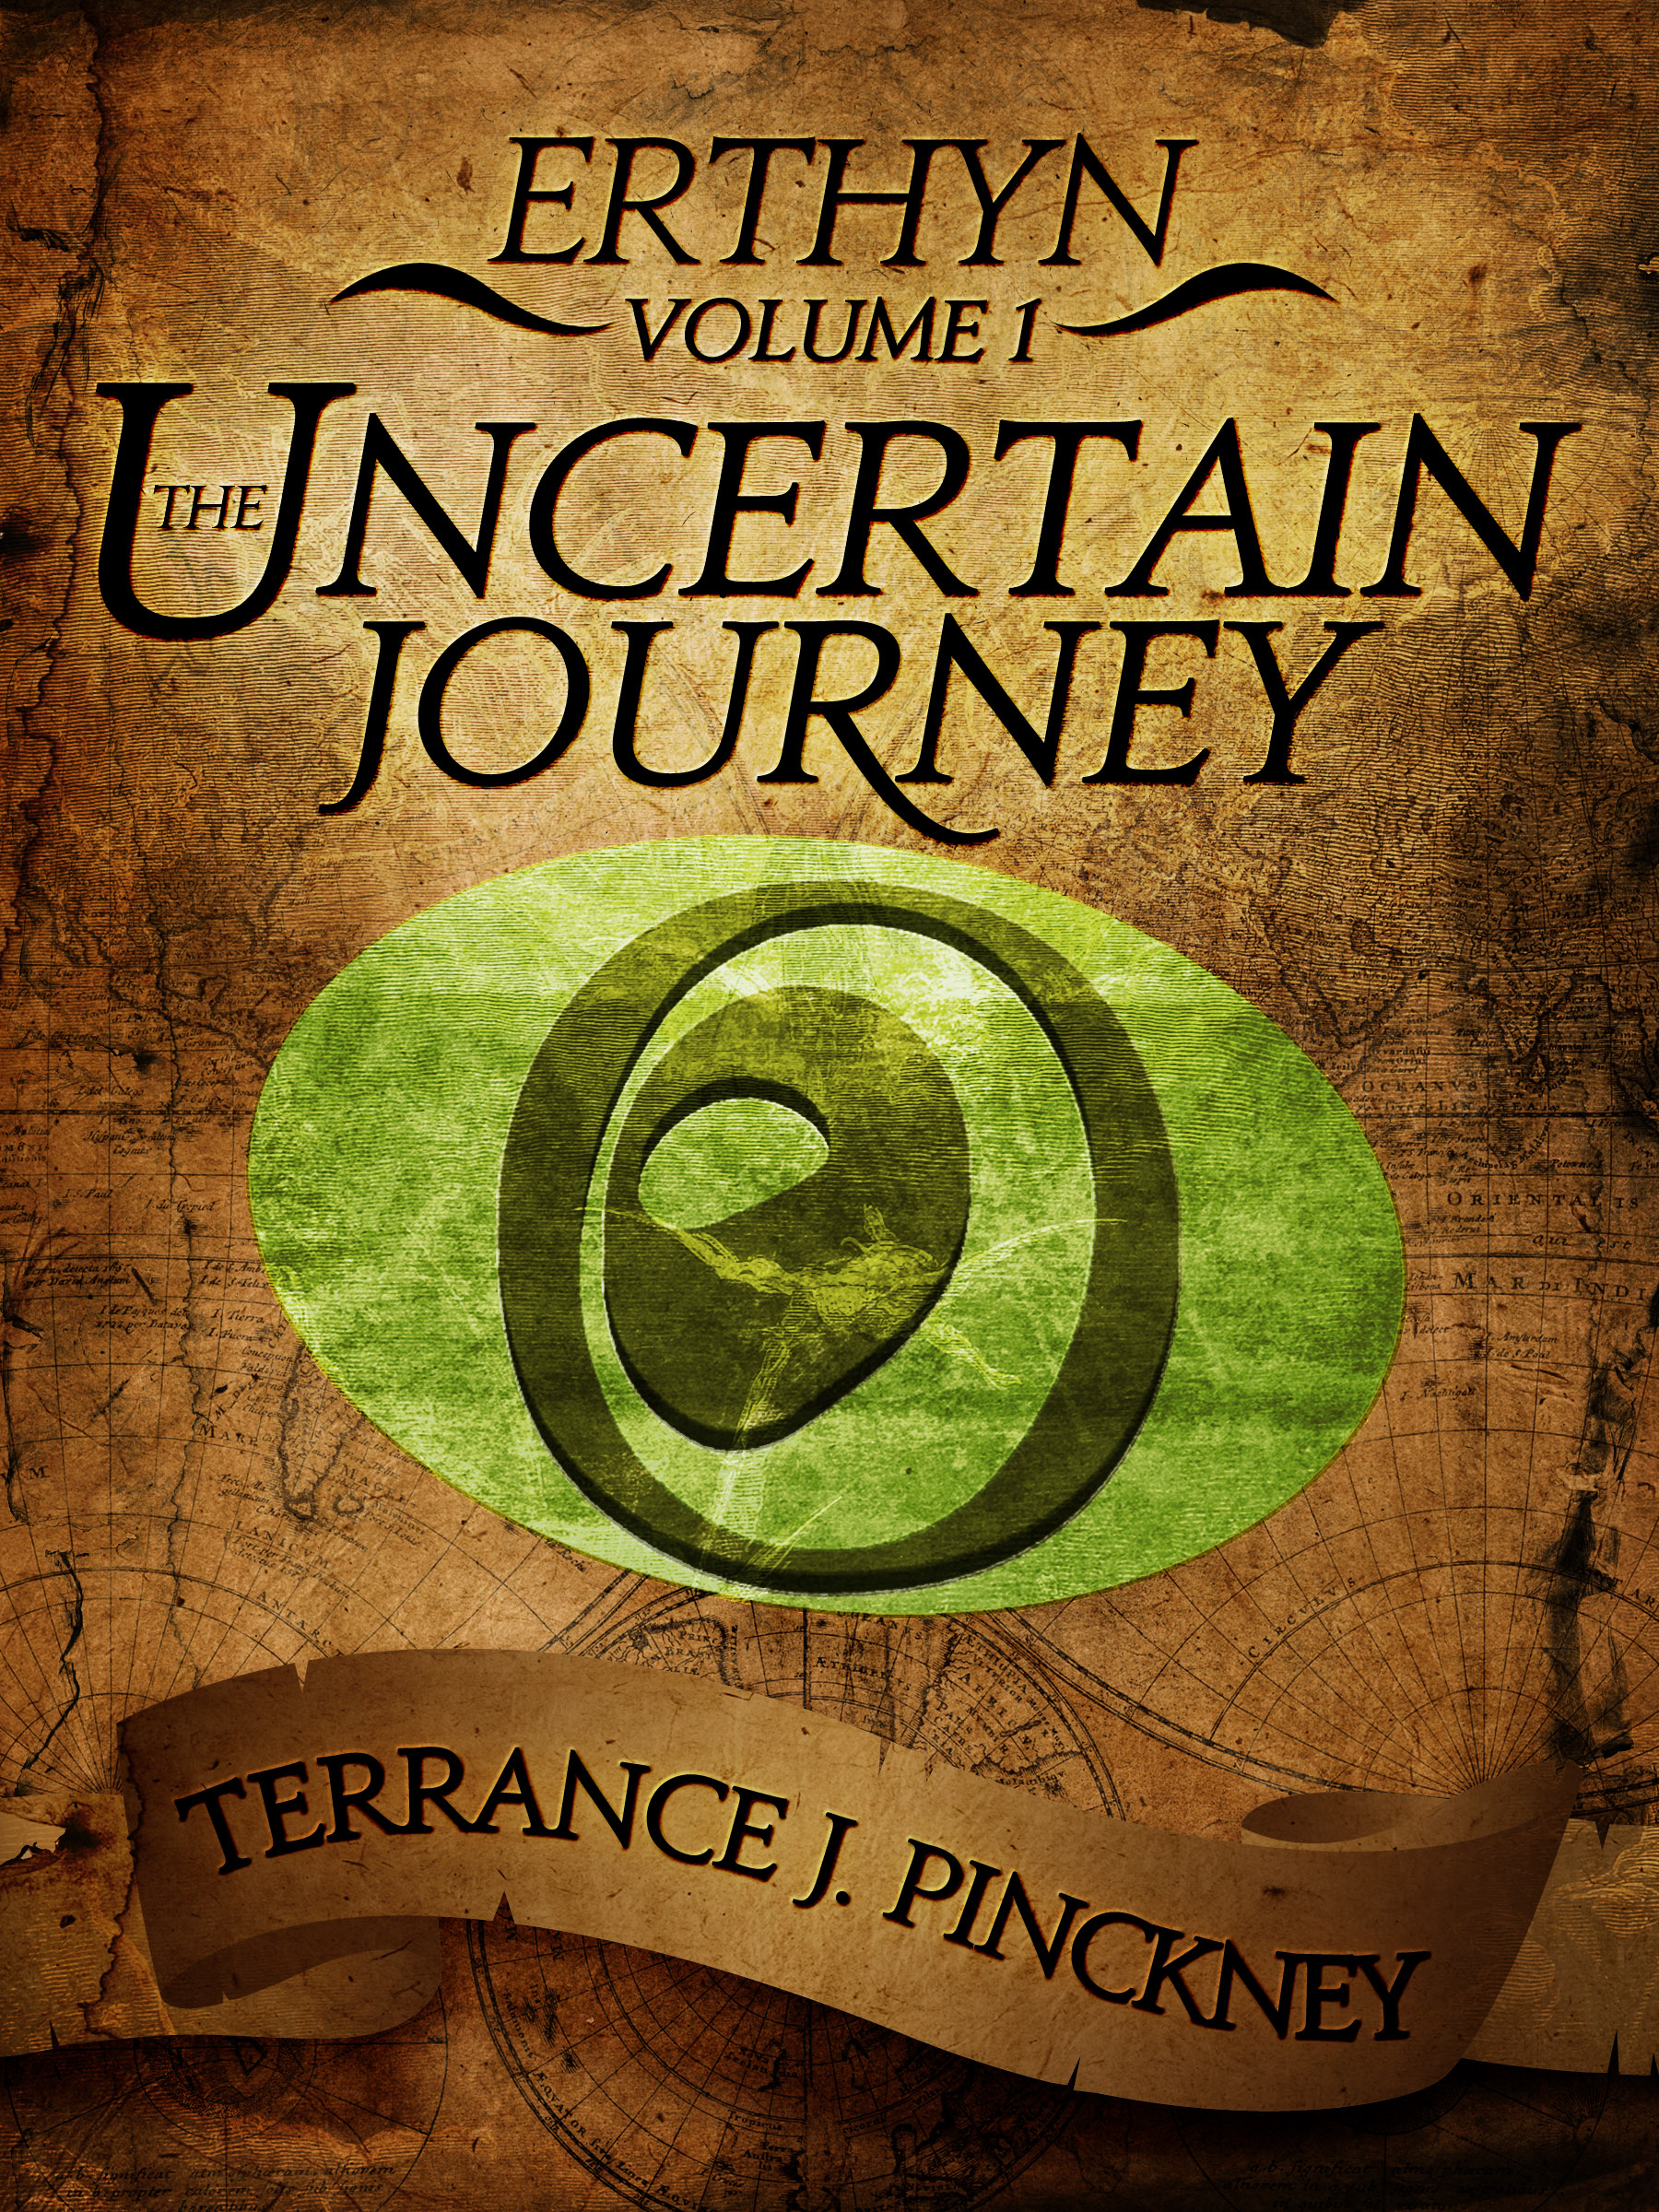 Erthyn Volume 1 The Uncertain Journey